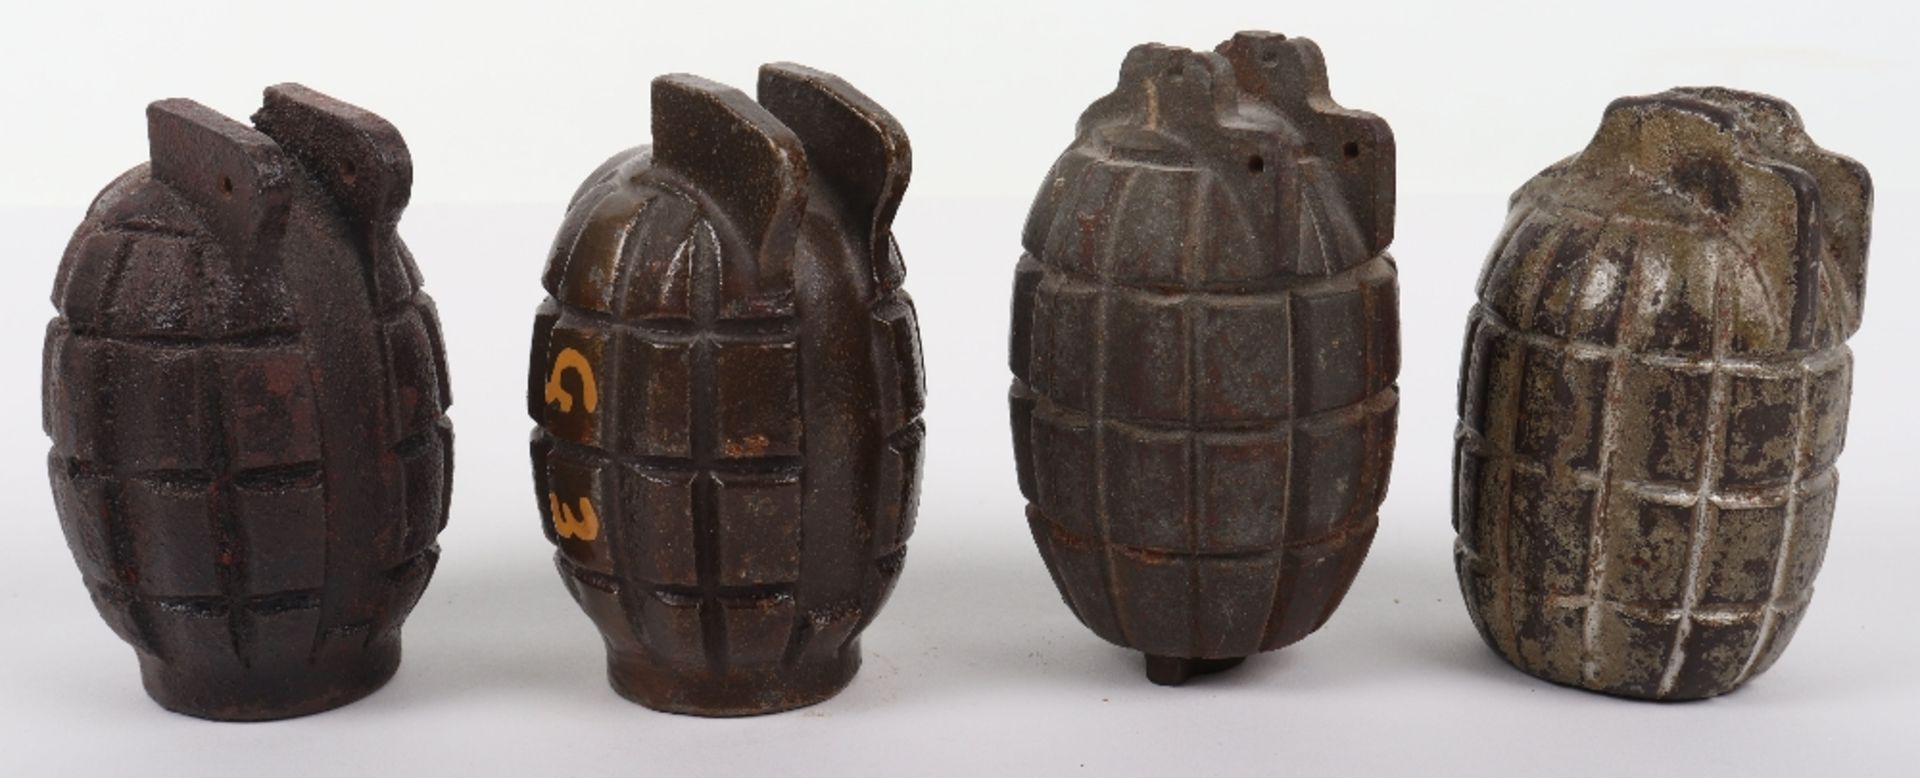 4x Inert British Mills Grenade Bodies - Image 2 of 4